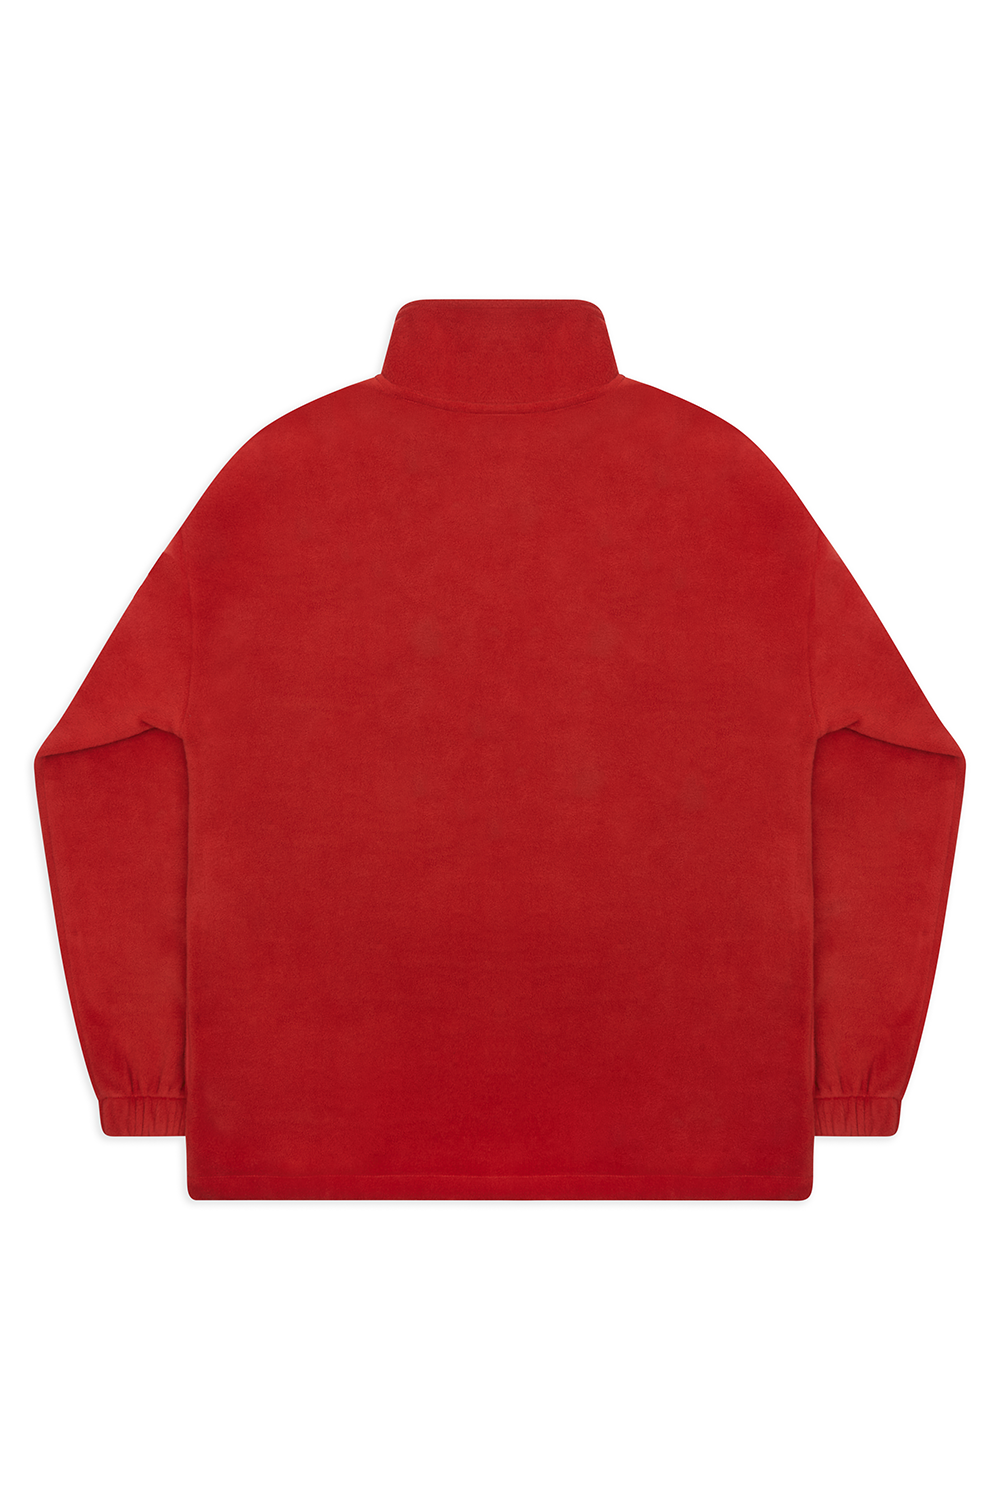 Monaco Vintage Fleece Red